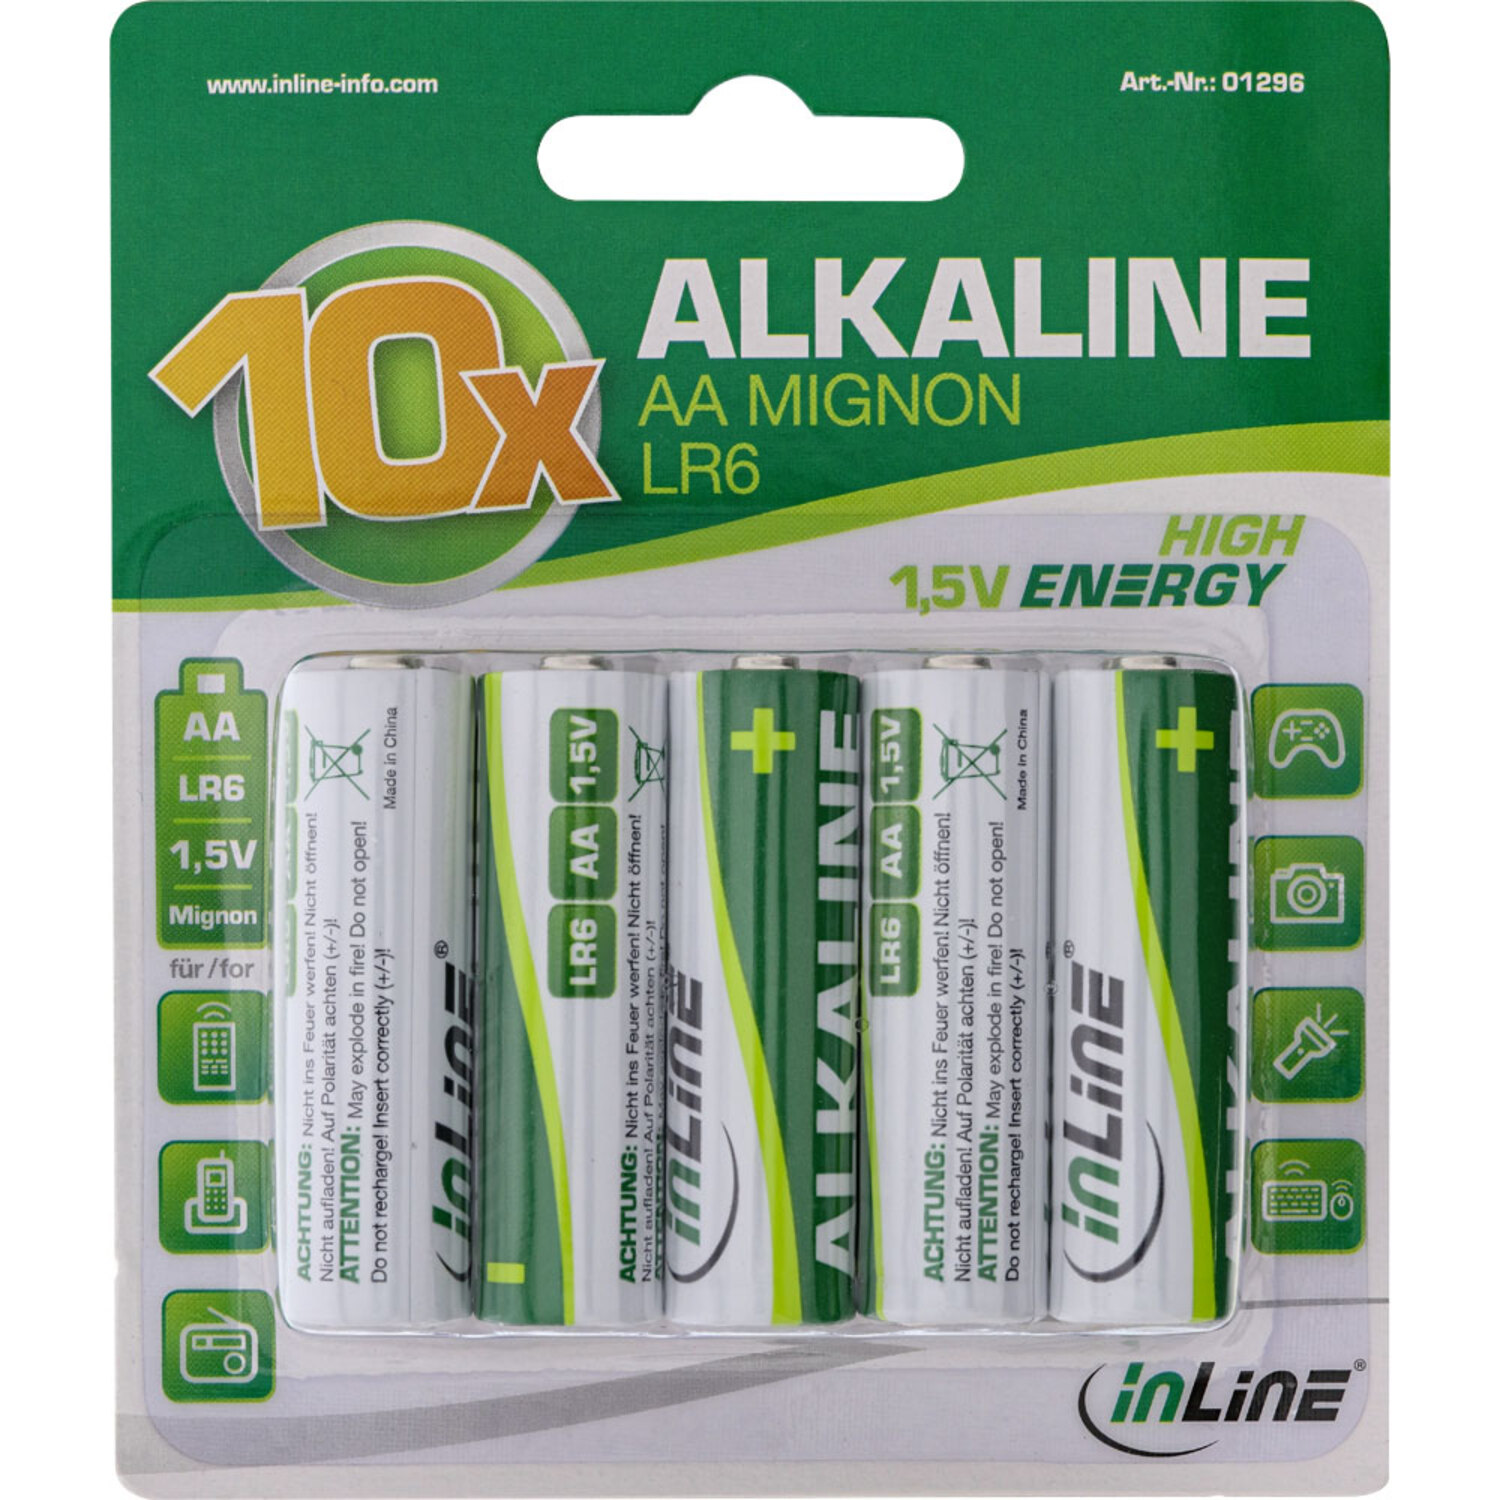 INLINE InLine® Alkaline High Energy / 10er / Mignon Batterie, Batterien Batterien (AA), Blister